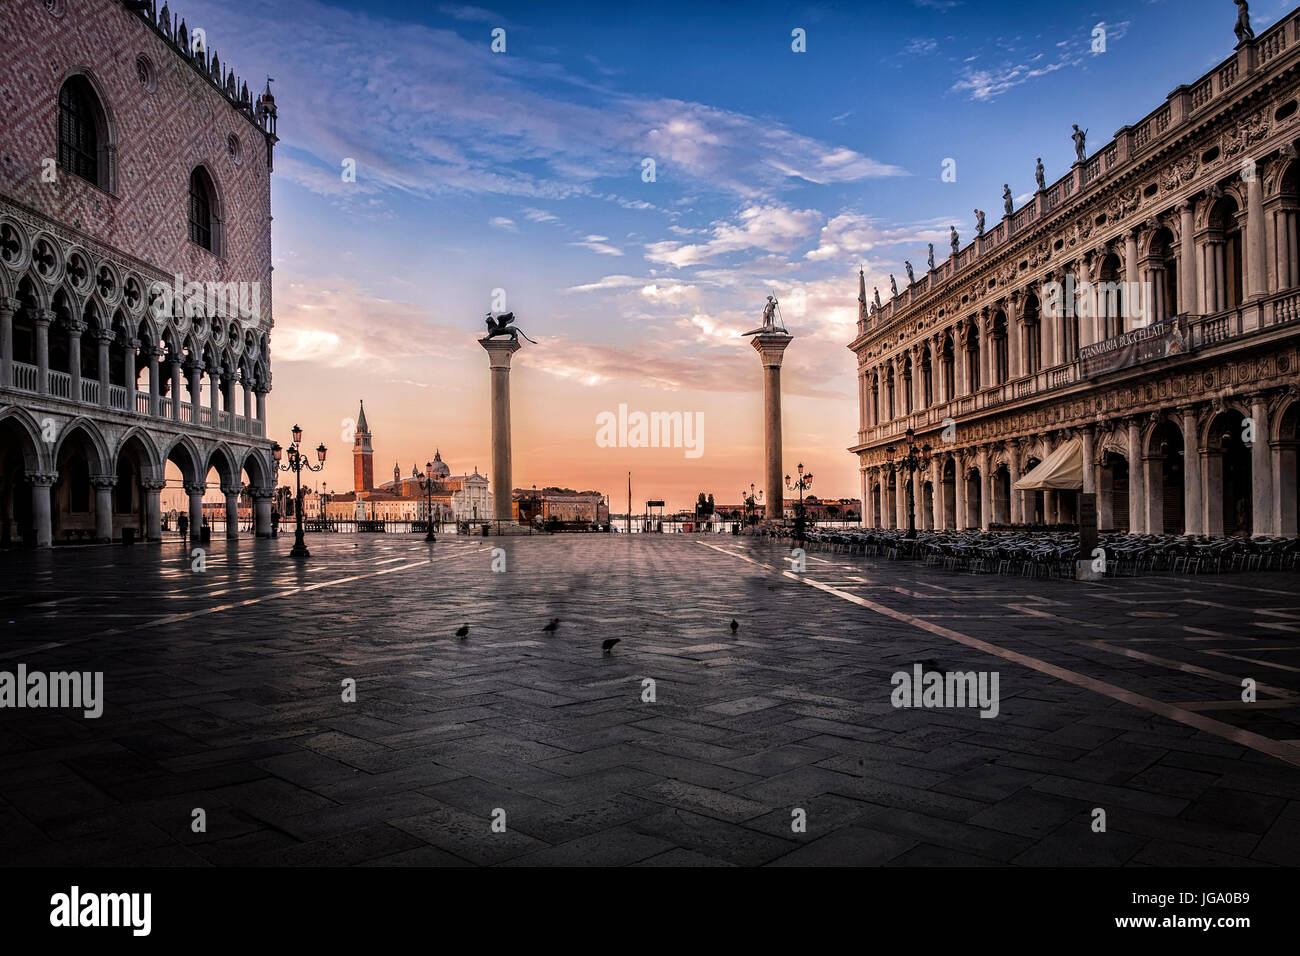 Dawn breaking over St. Mark's Square in Venice, Italy Stock Photo